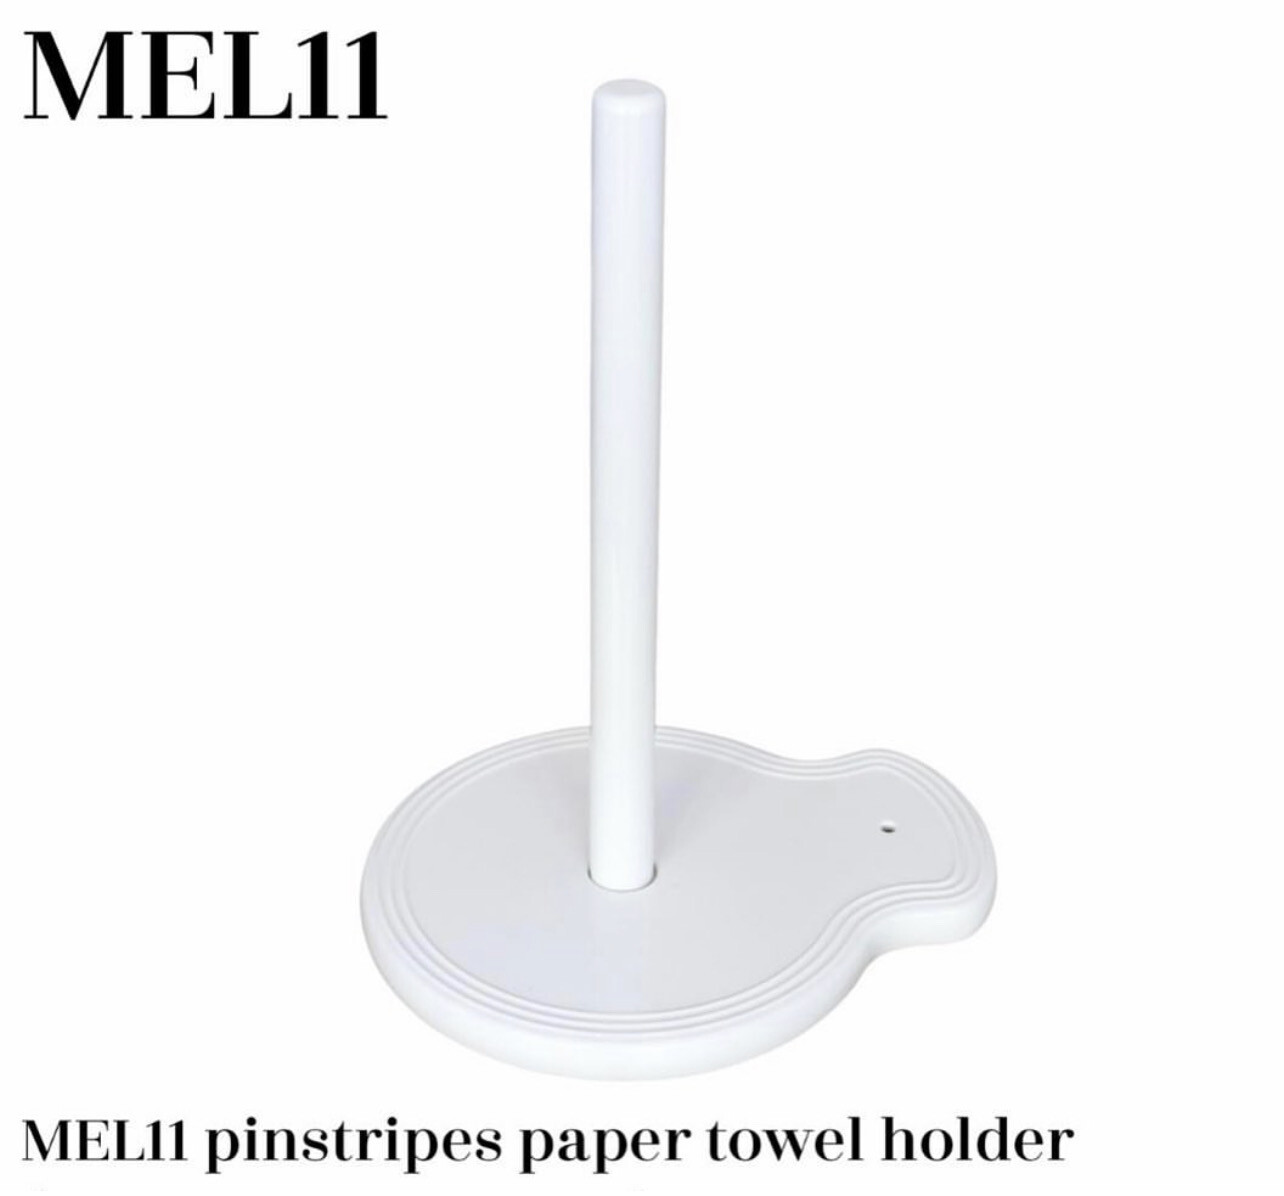 MEL 11 Pinstripe Paper Towel Holder